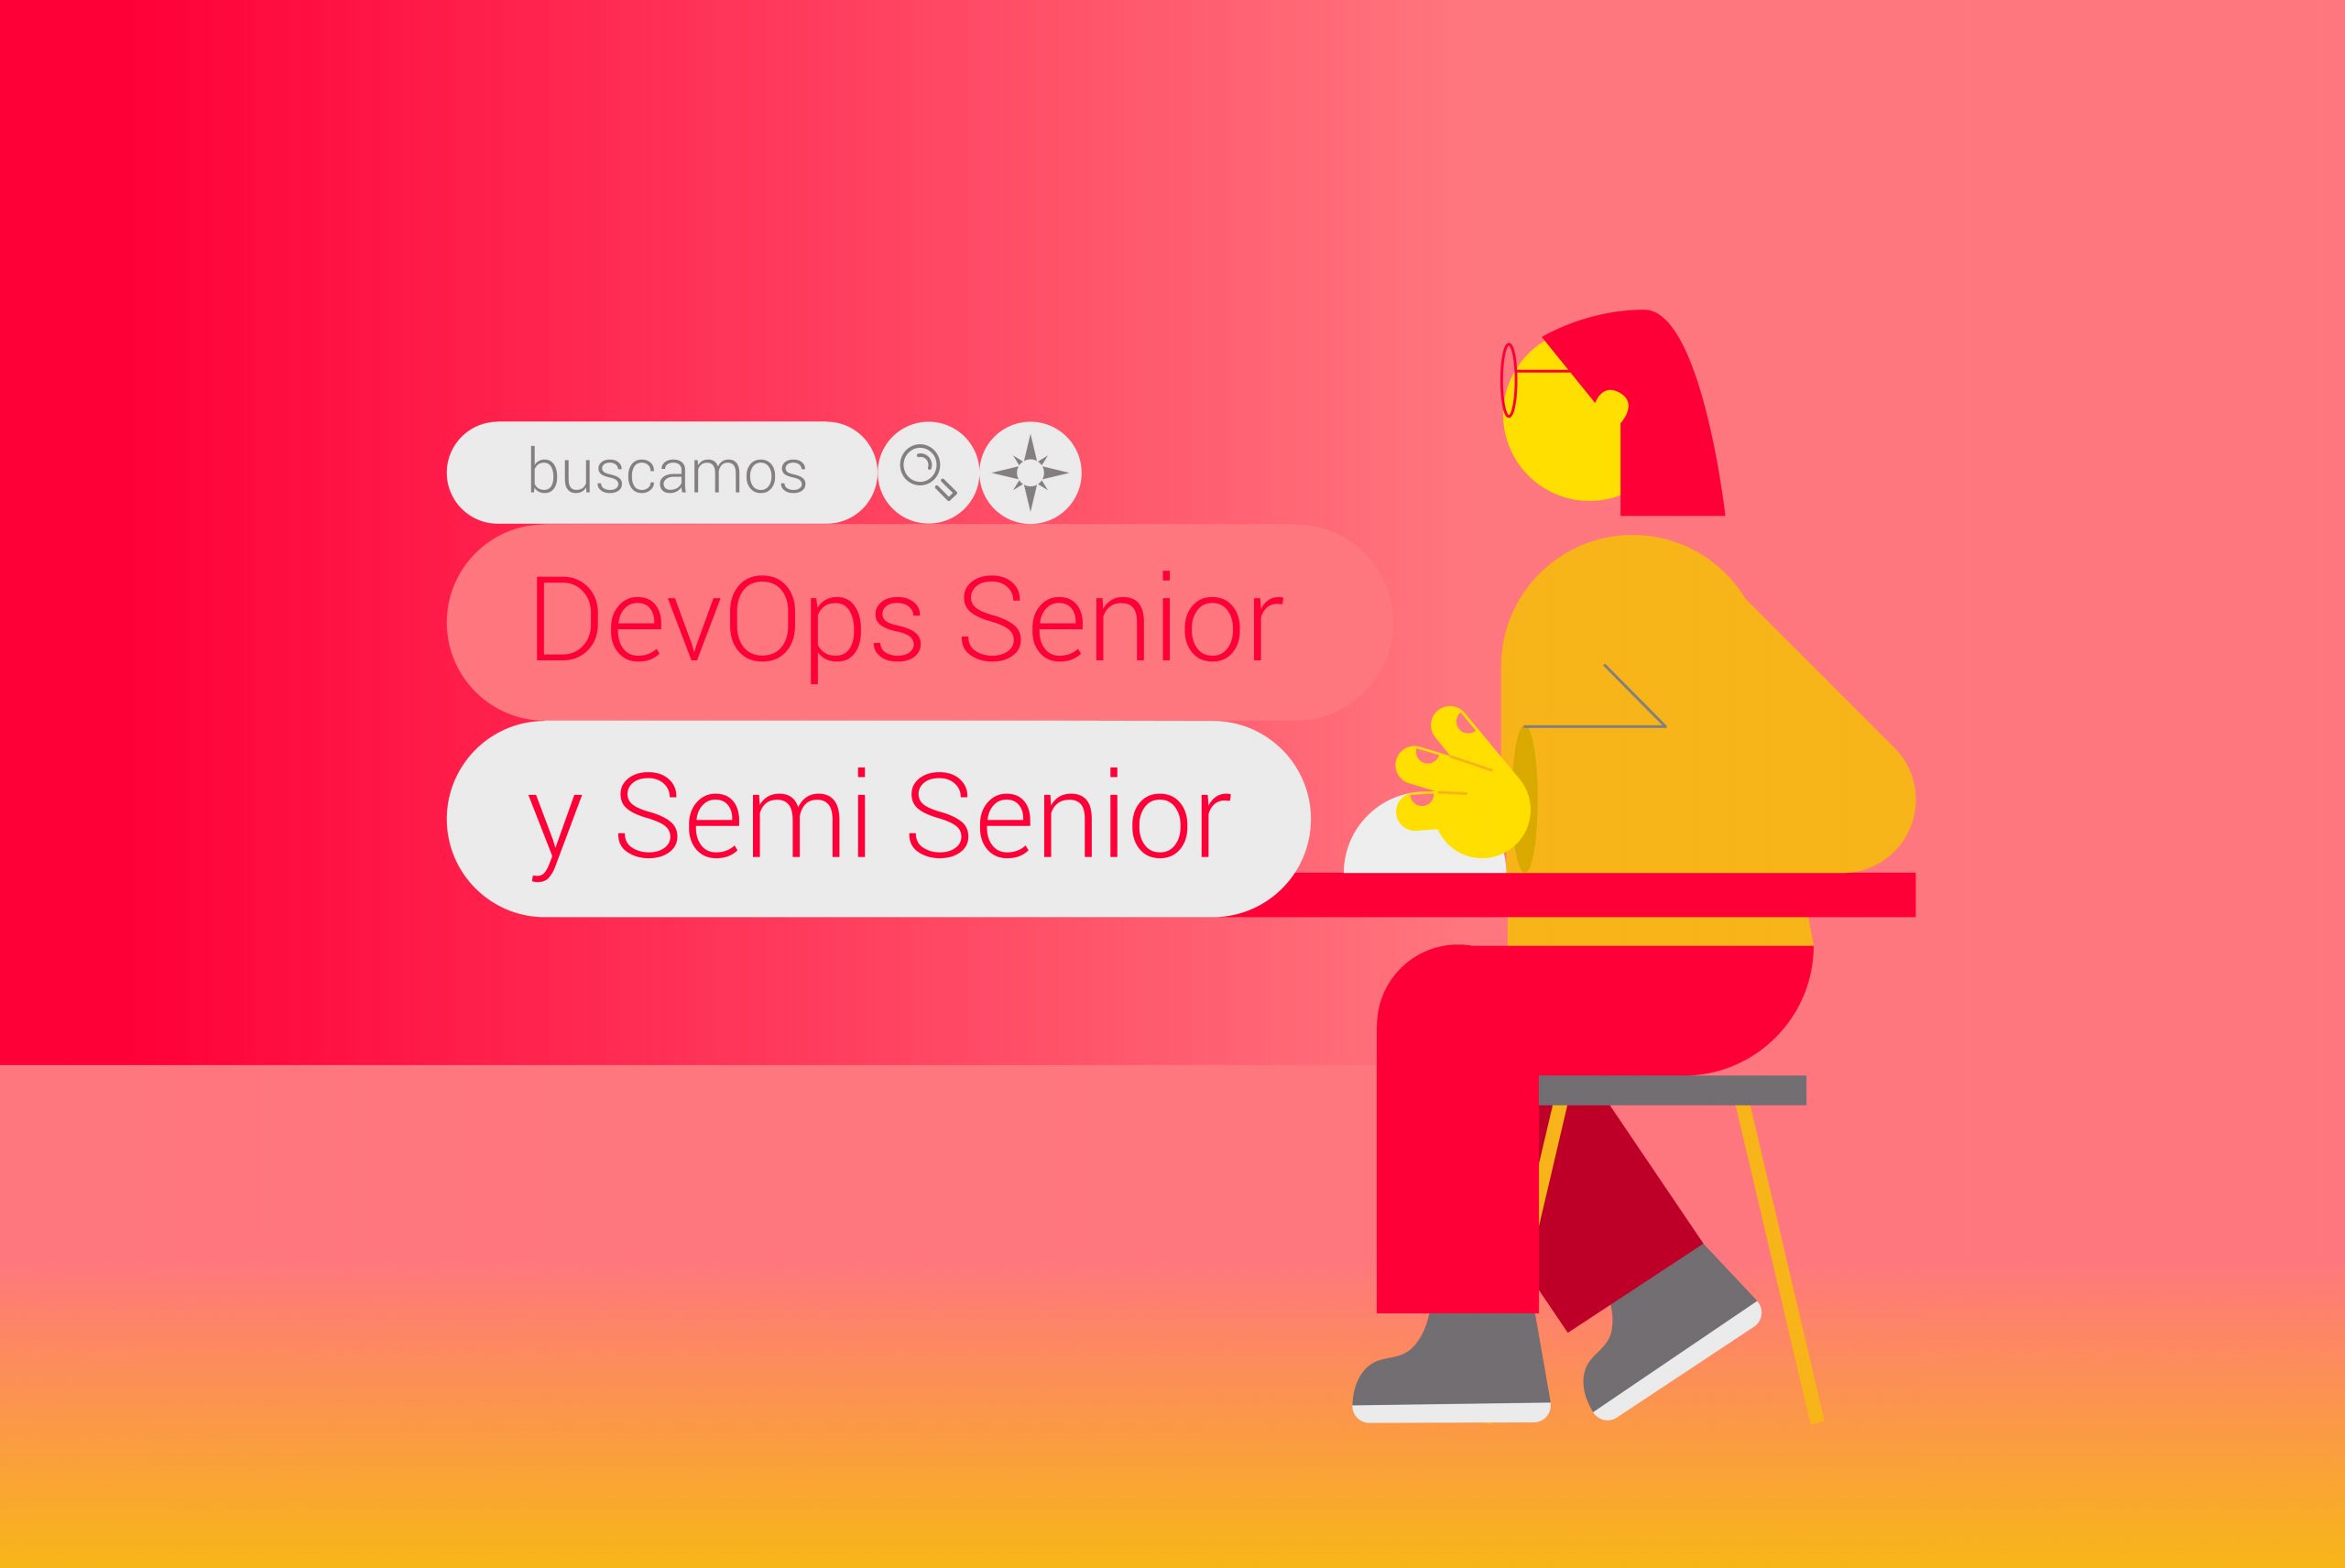 DevOps senior y semi senior